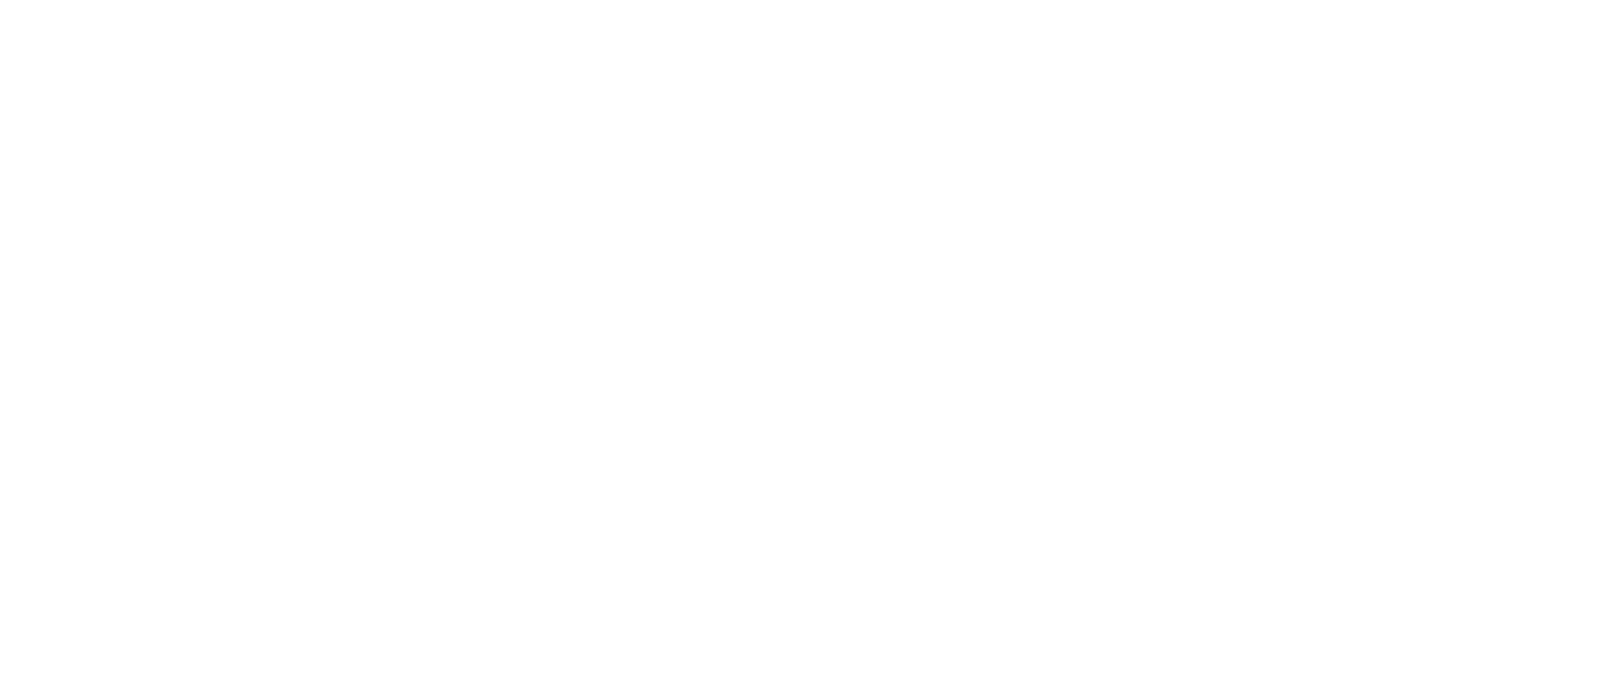 infinitediamonds